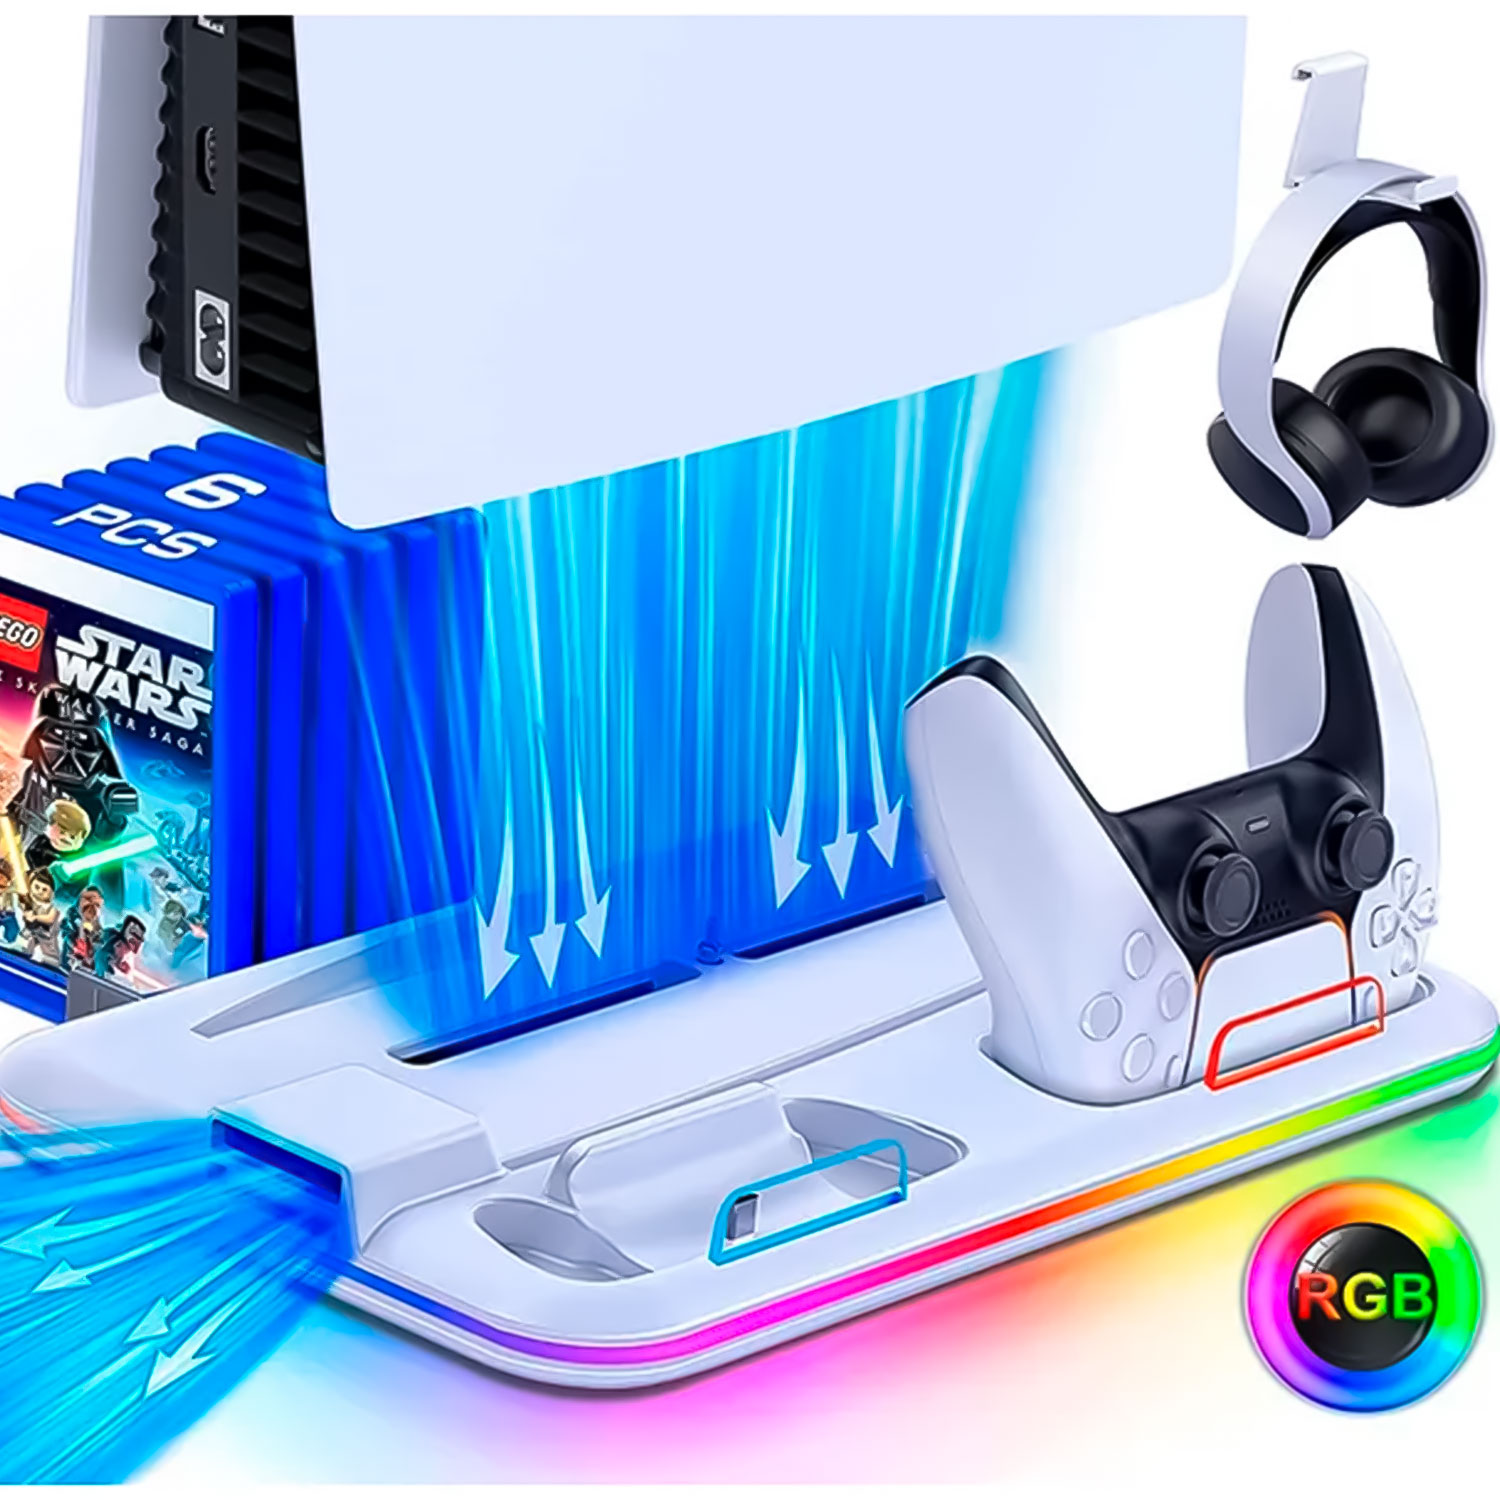 Base de Carregamento Multifuncional SKT-DZ501 RGB para Playstation 5
